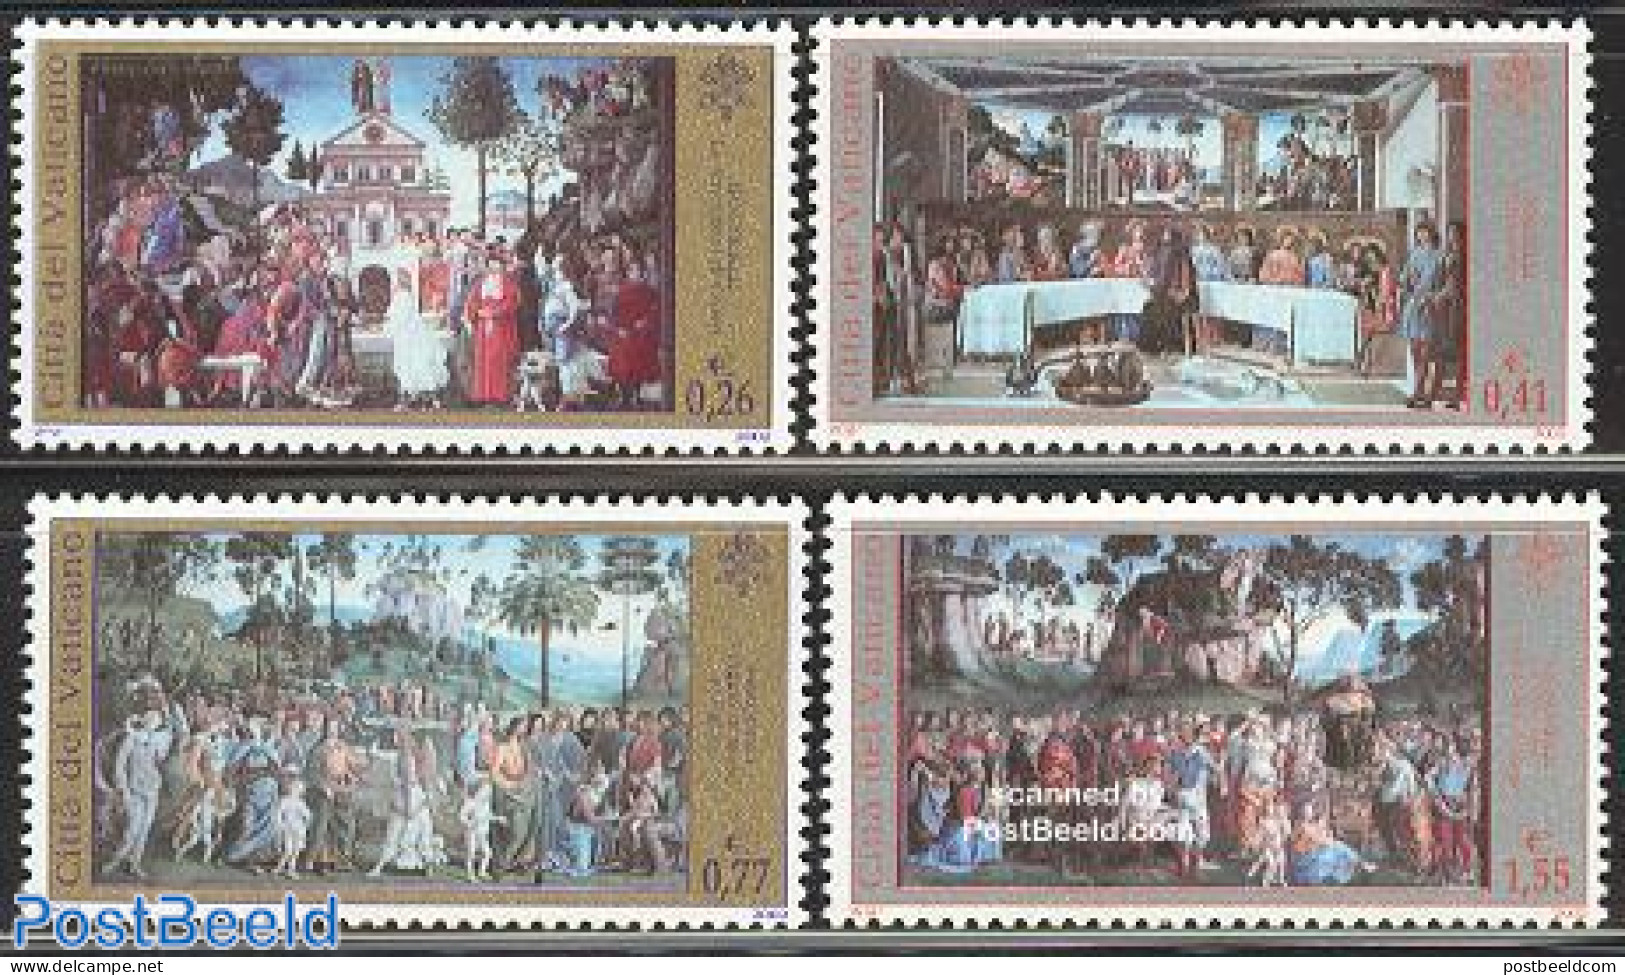 Vatican 2002 Sixtine Chapel 4v, Mint NH, Art - Paintings - Unused Stamps